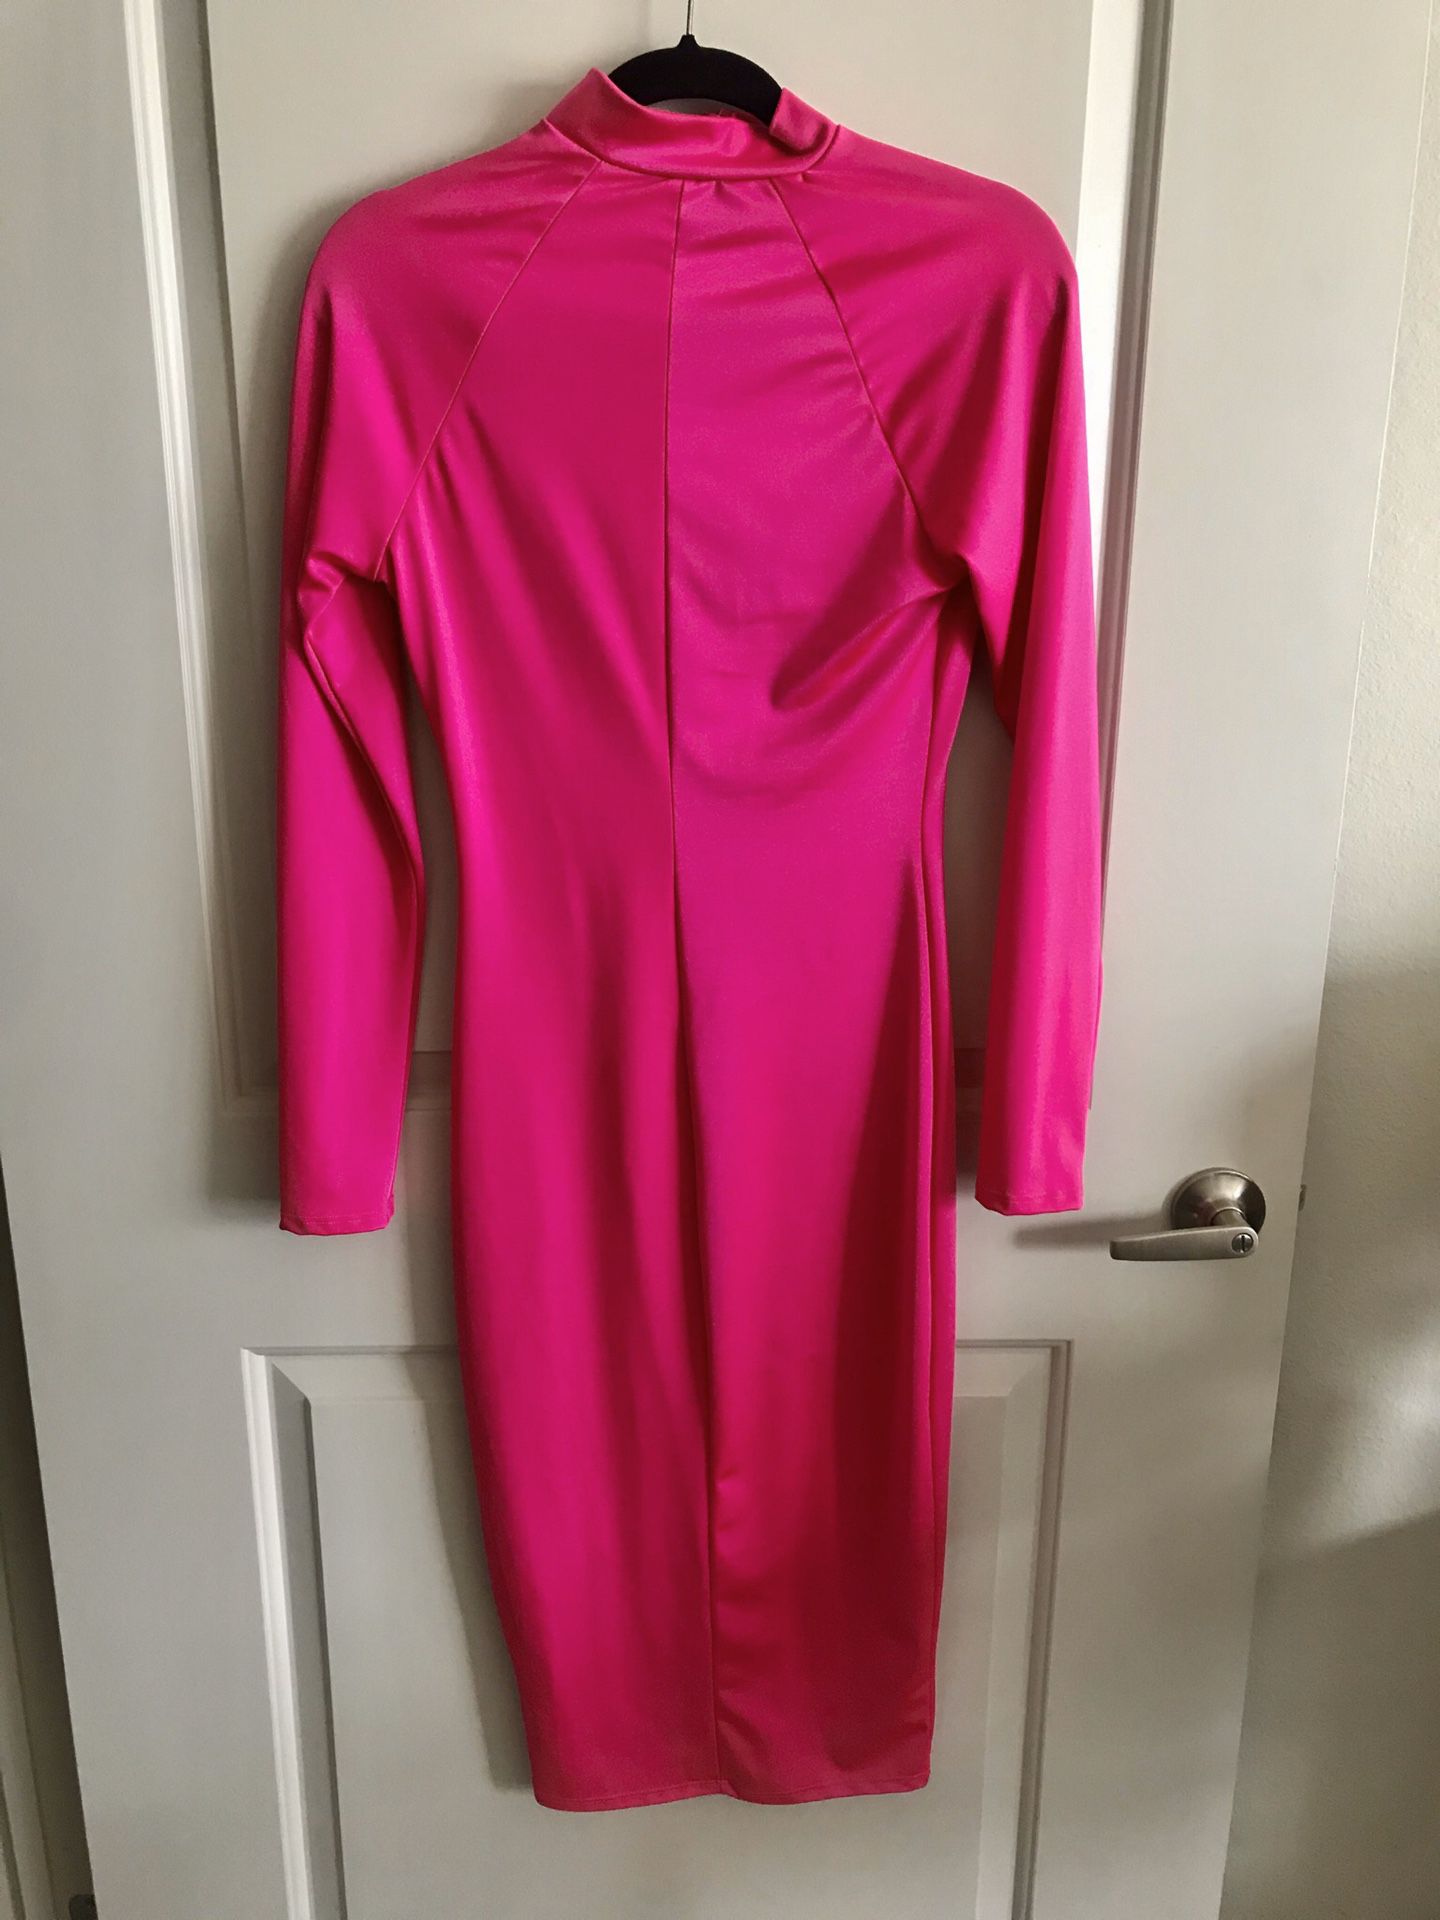 FASHION NOVA hot pink midi dress-size medium, never worn! $23 OBO